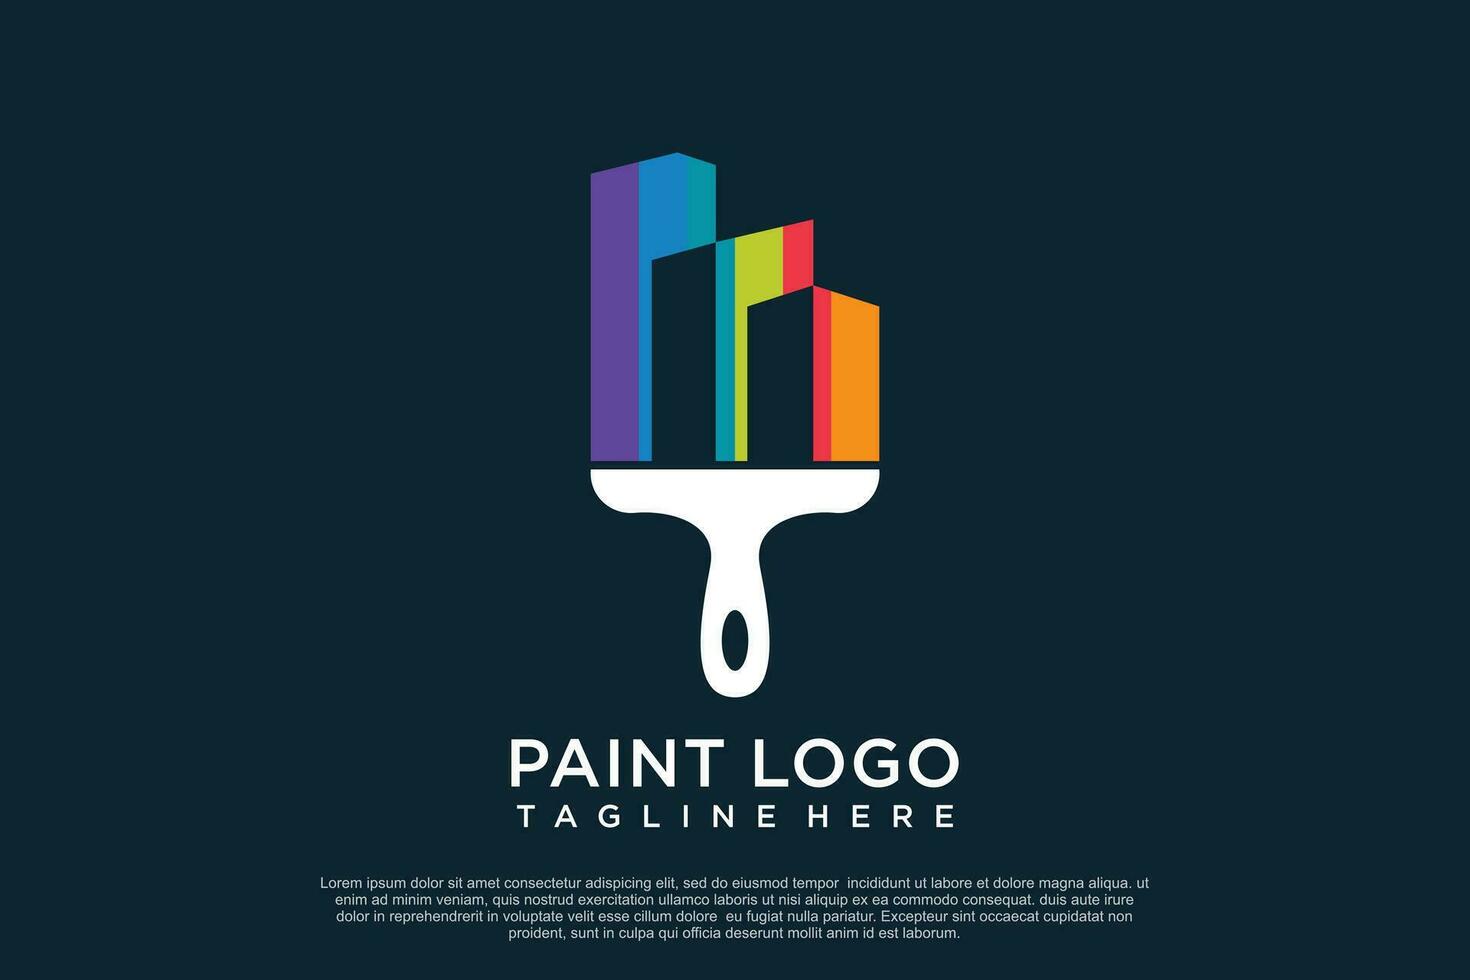 måla logotyp design mall med kreativ unik begrepp premie vektor